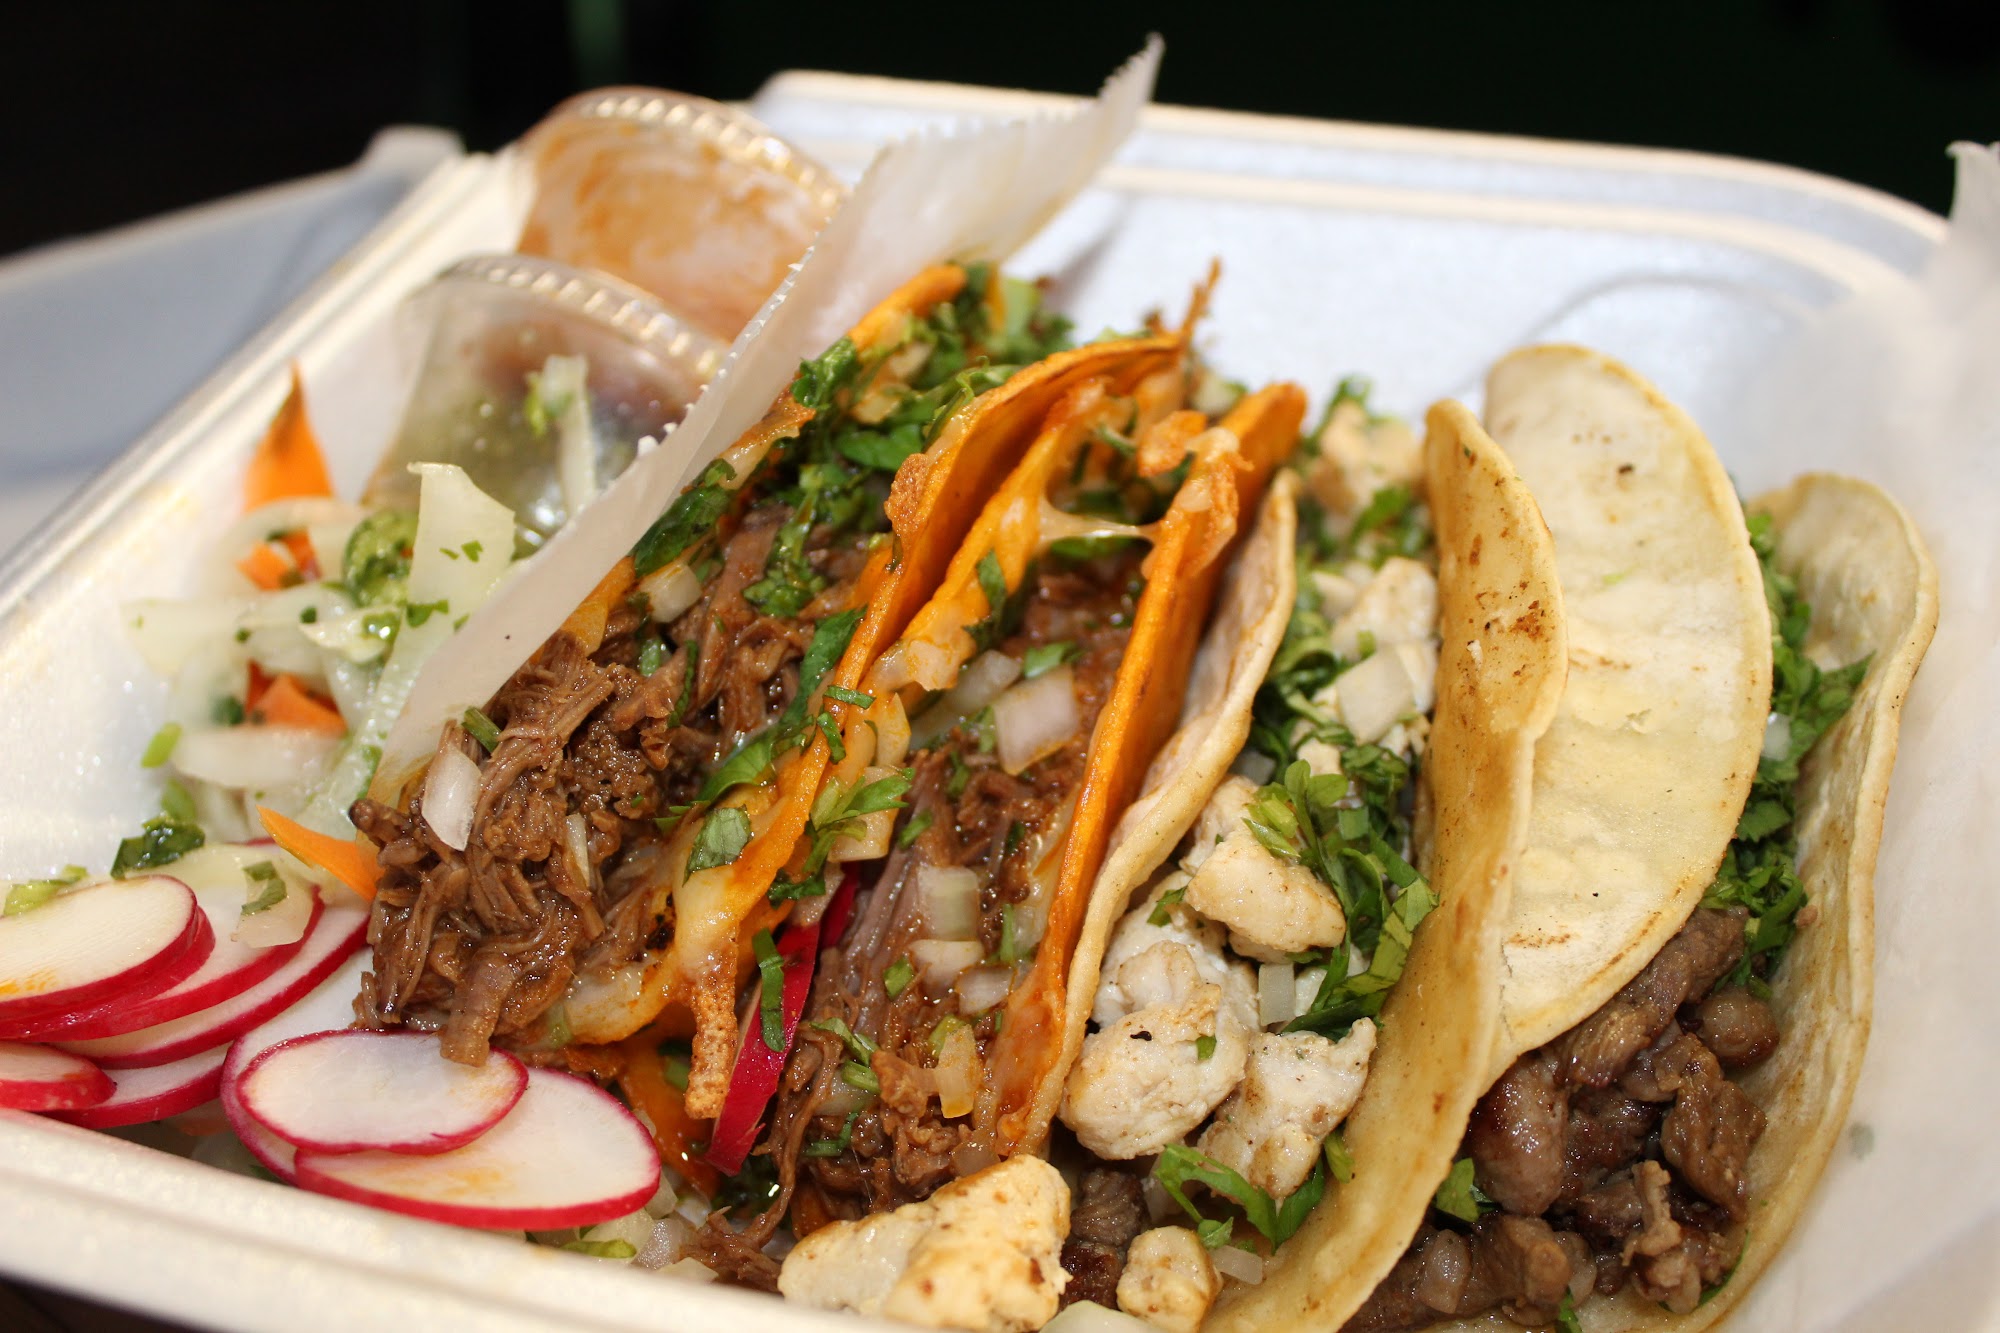 Cilantro & Tacos (Food Truck)